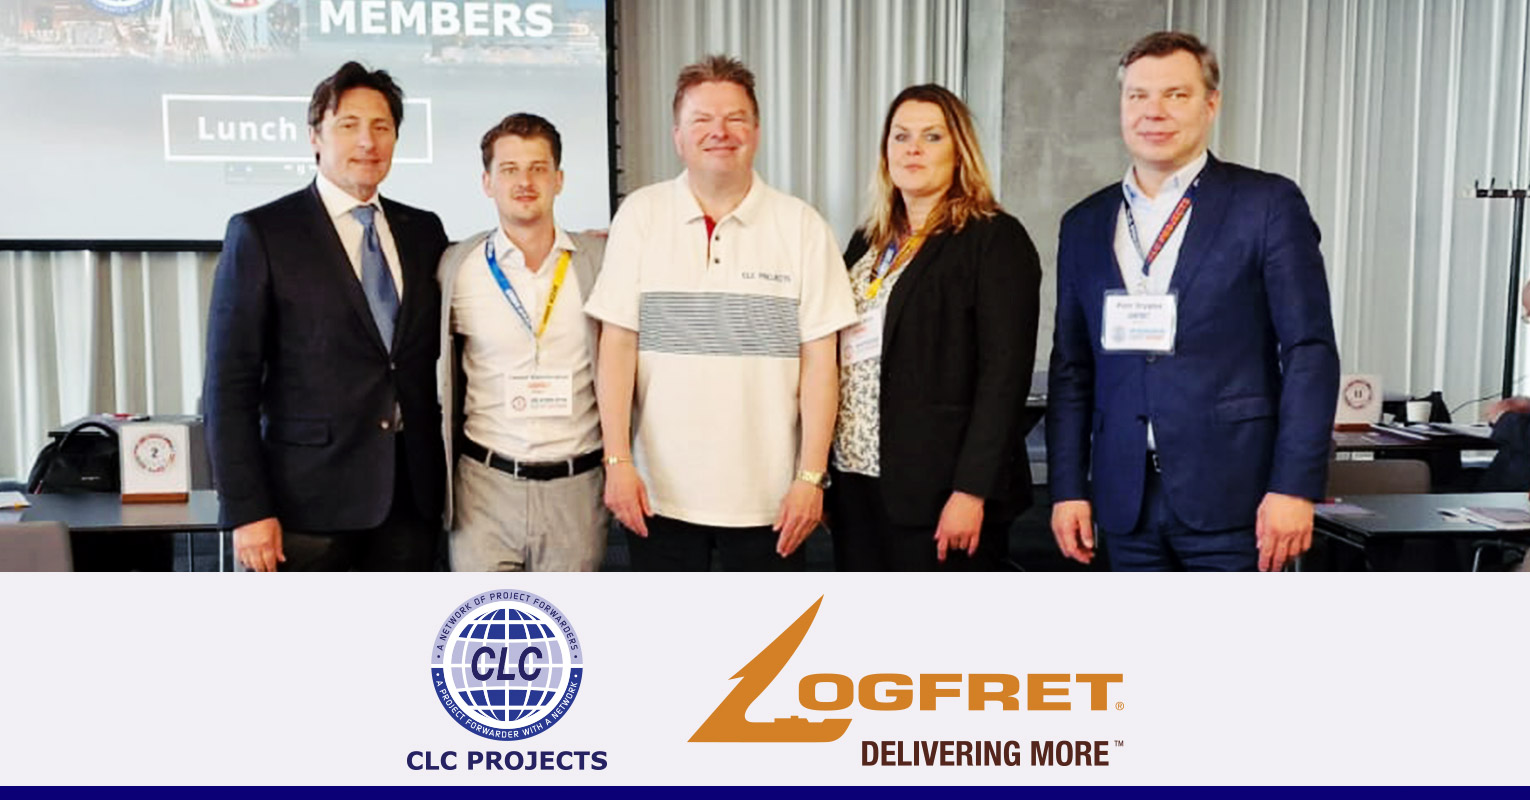 Marc Millet, Yannick Vanrenterghem, Sharon Bick & Piotr Dryglas of Logfret Group met with CLC Projects Chairman